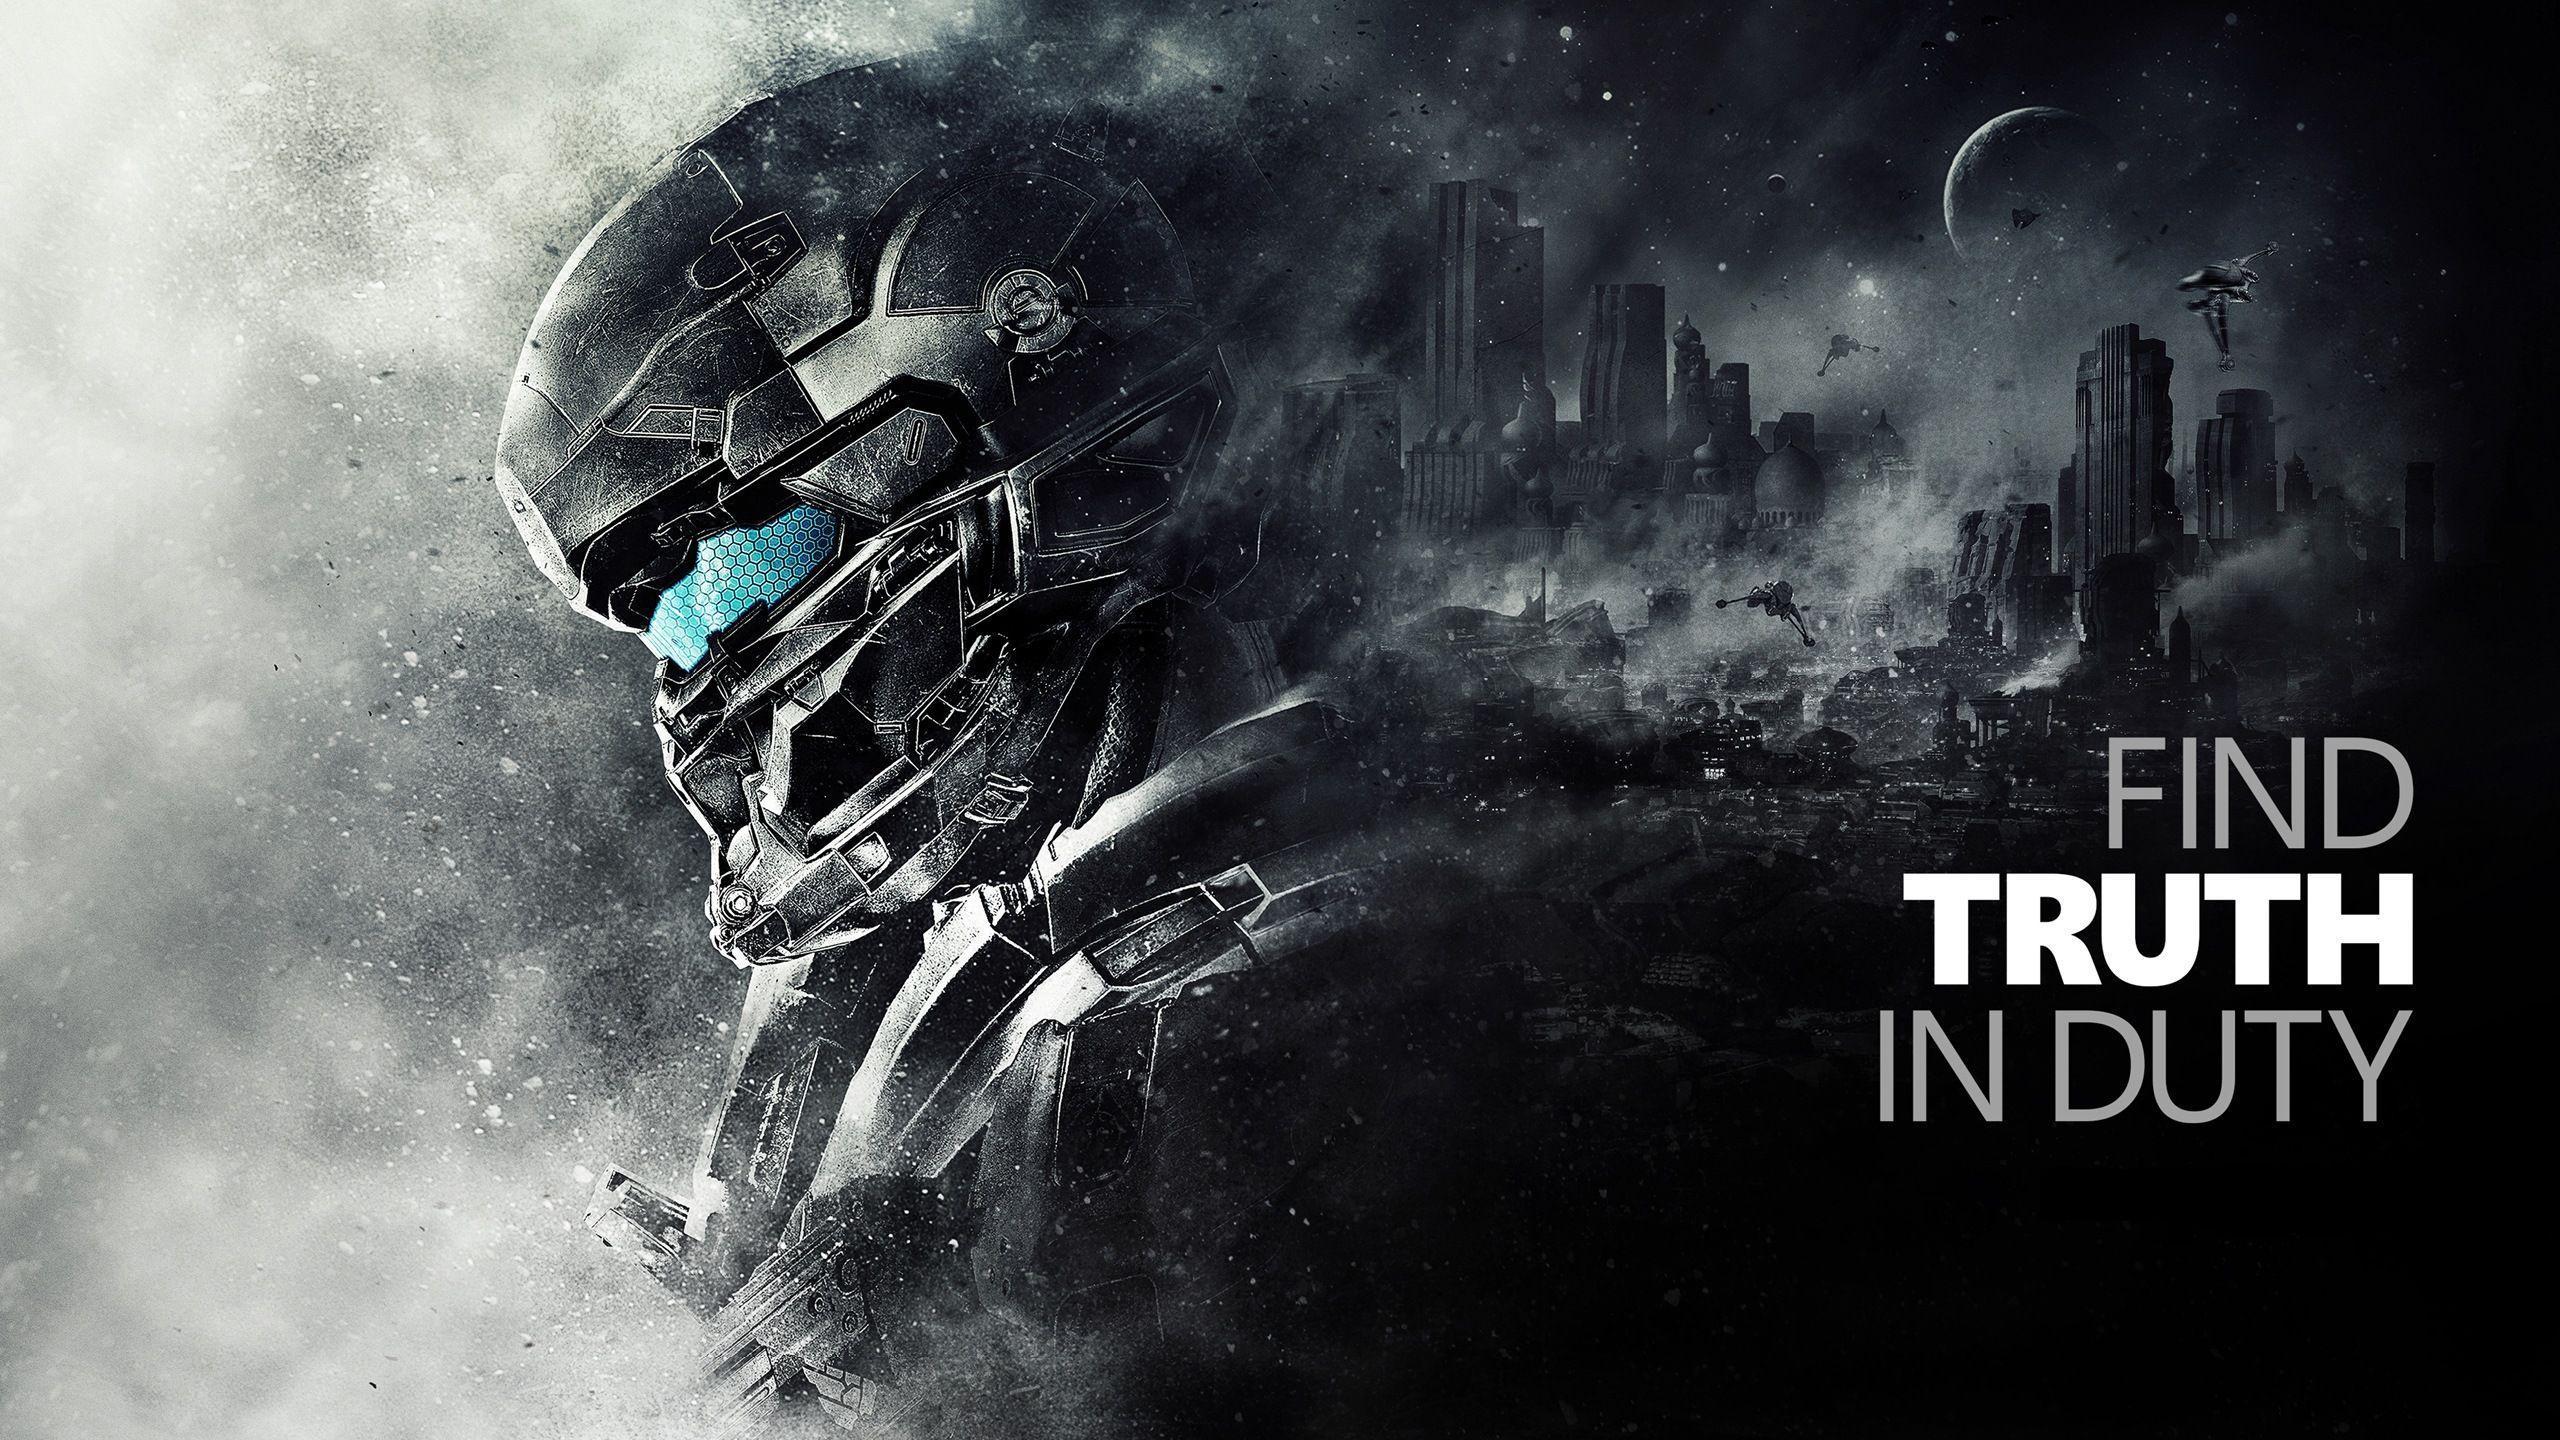 Halo 5: Guardians HD Wallpaper